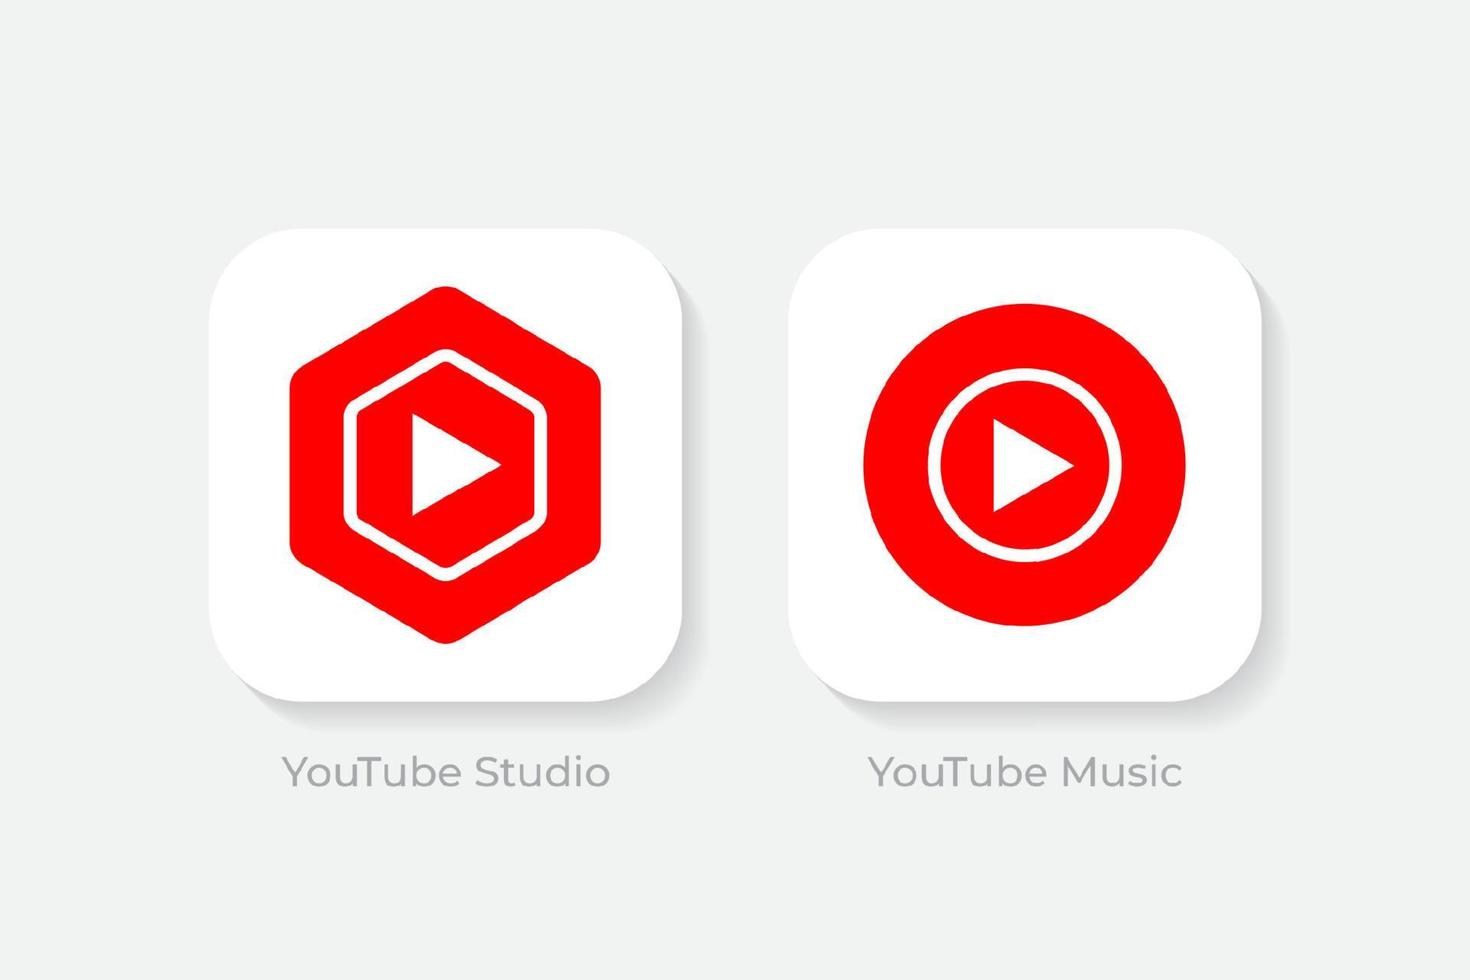 youtube studio und youtube music logos illustration vektor